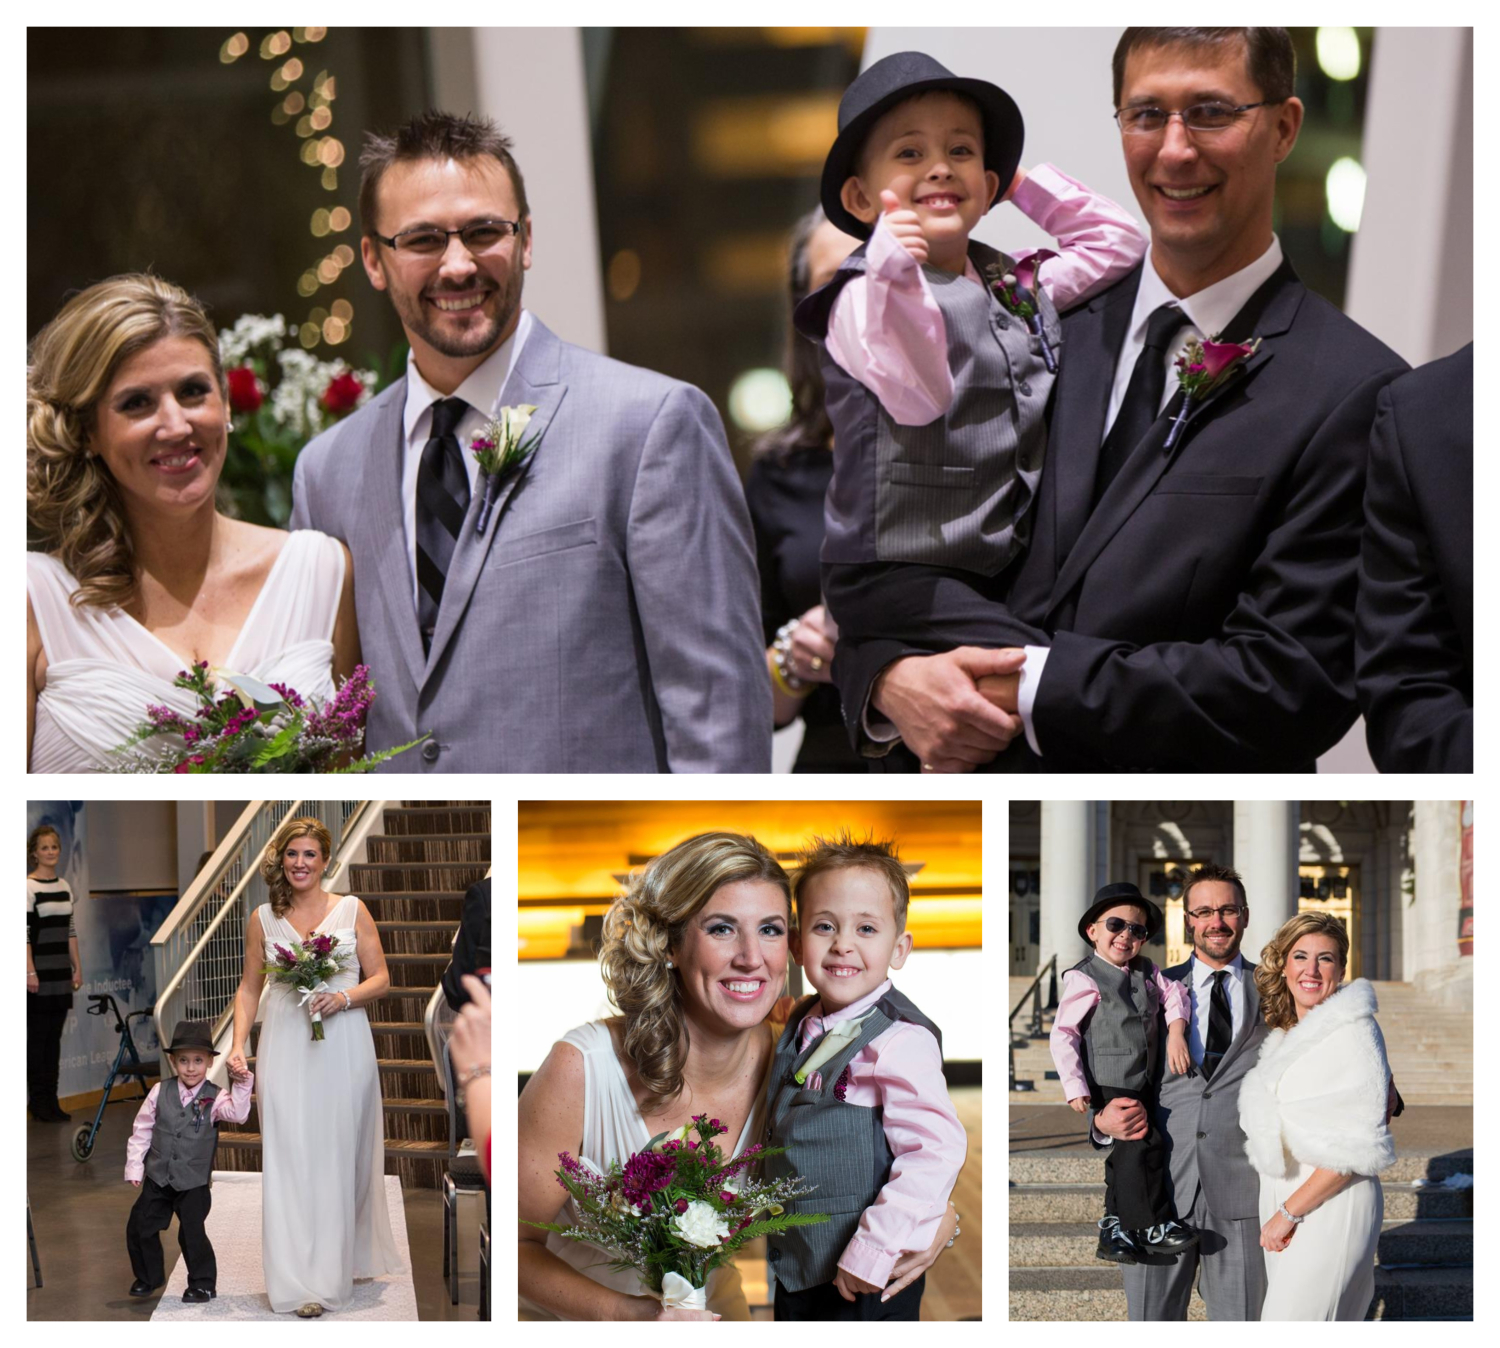 A collage of photos of the Vavruska's wedding